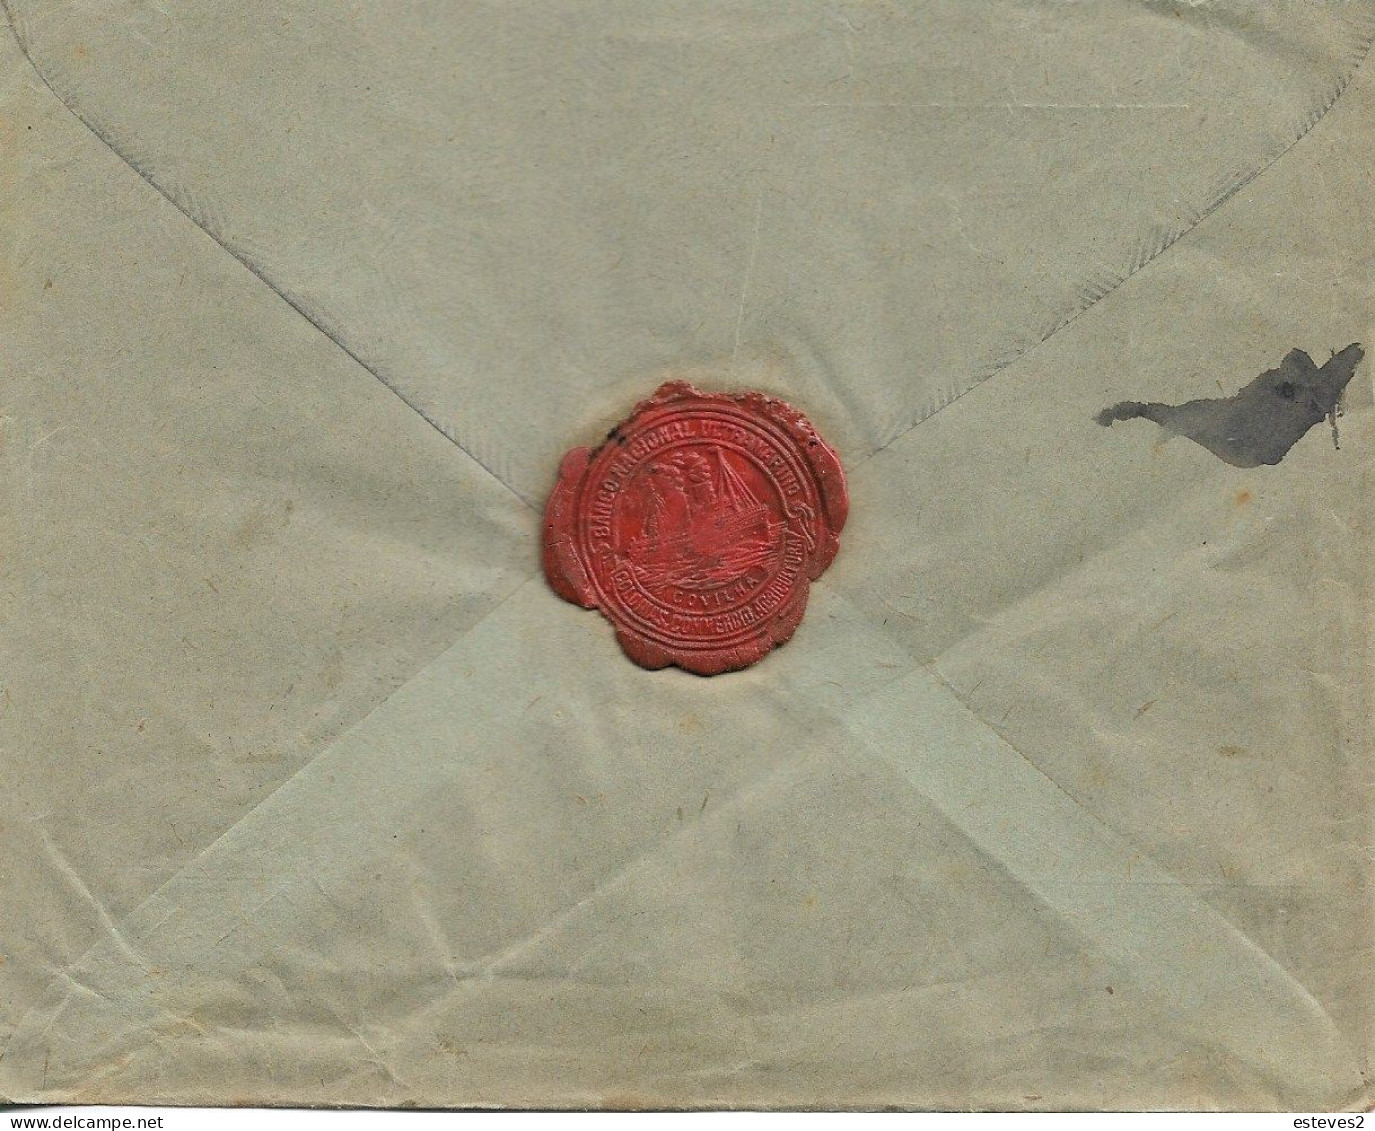 Portugal 1922 , Perfin BNU,  Covilhã ,  Santarém  , Wax Seal , Registration Stamp , Banco Nacional Ultramarino Cover - Brieven En Documenten